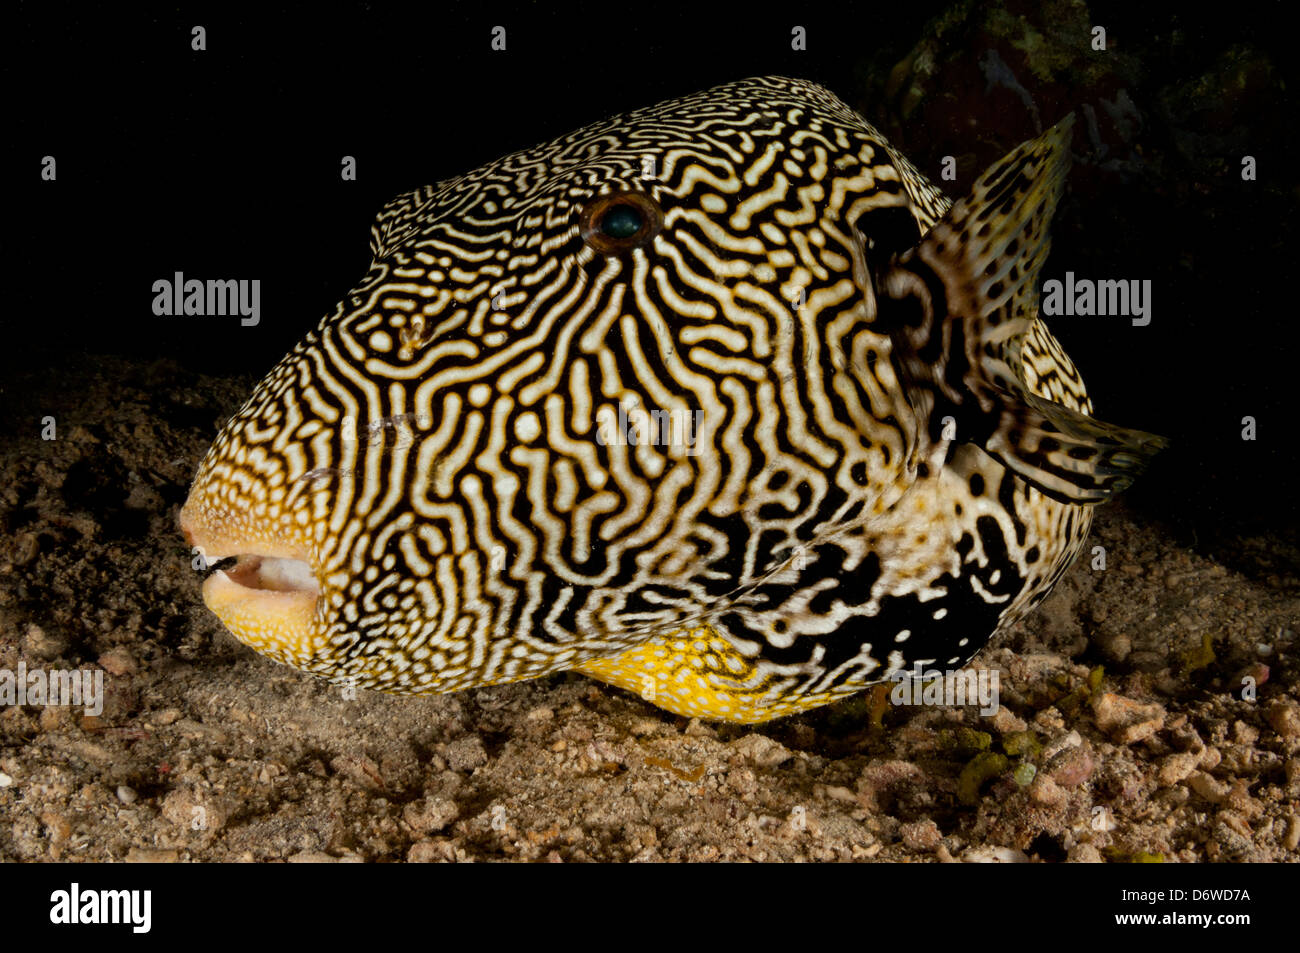 Star pufferfish swimming over rocky reef at night Stock Photo